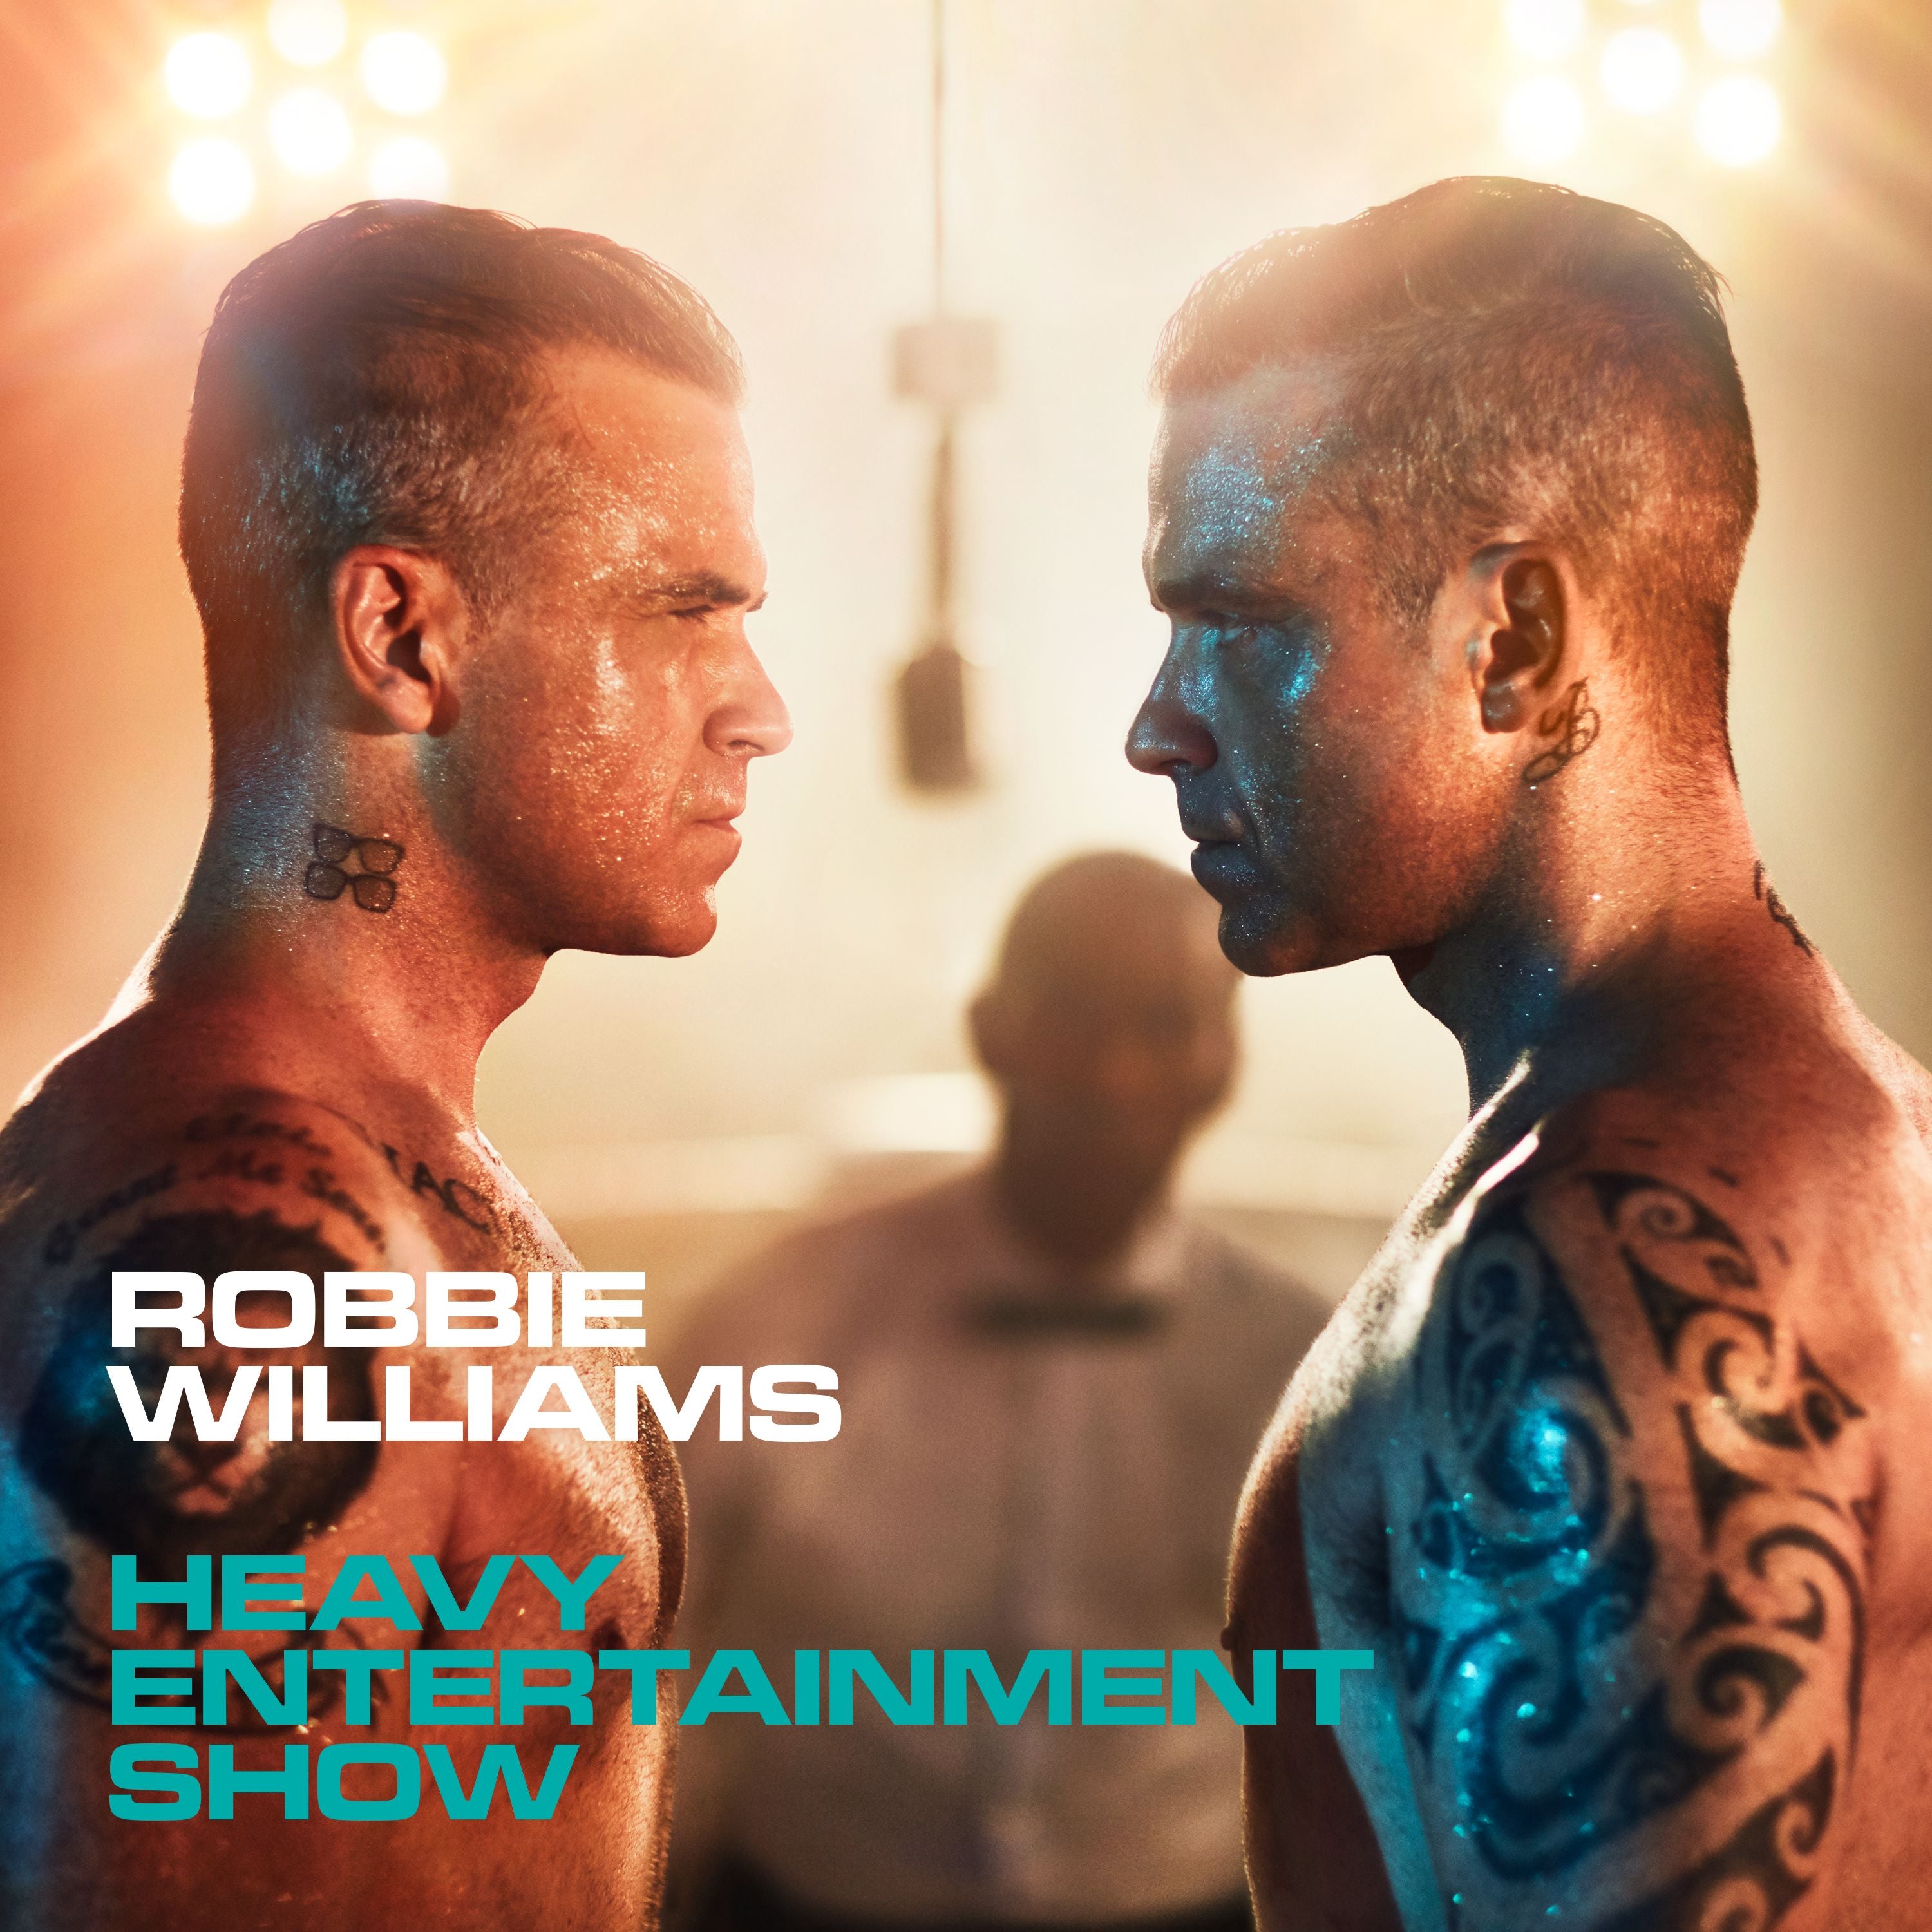  The Heavy Entertainment Show - Robbie Williams 